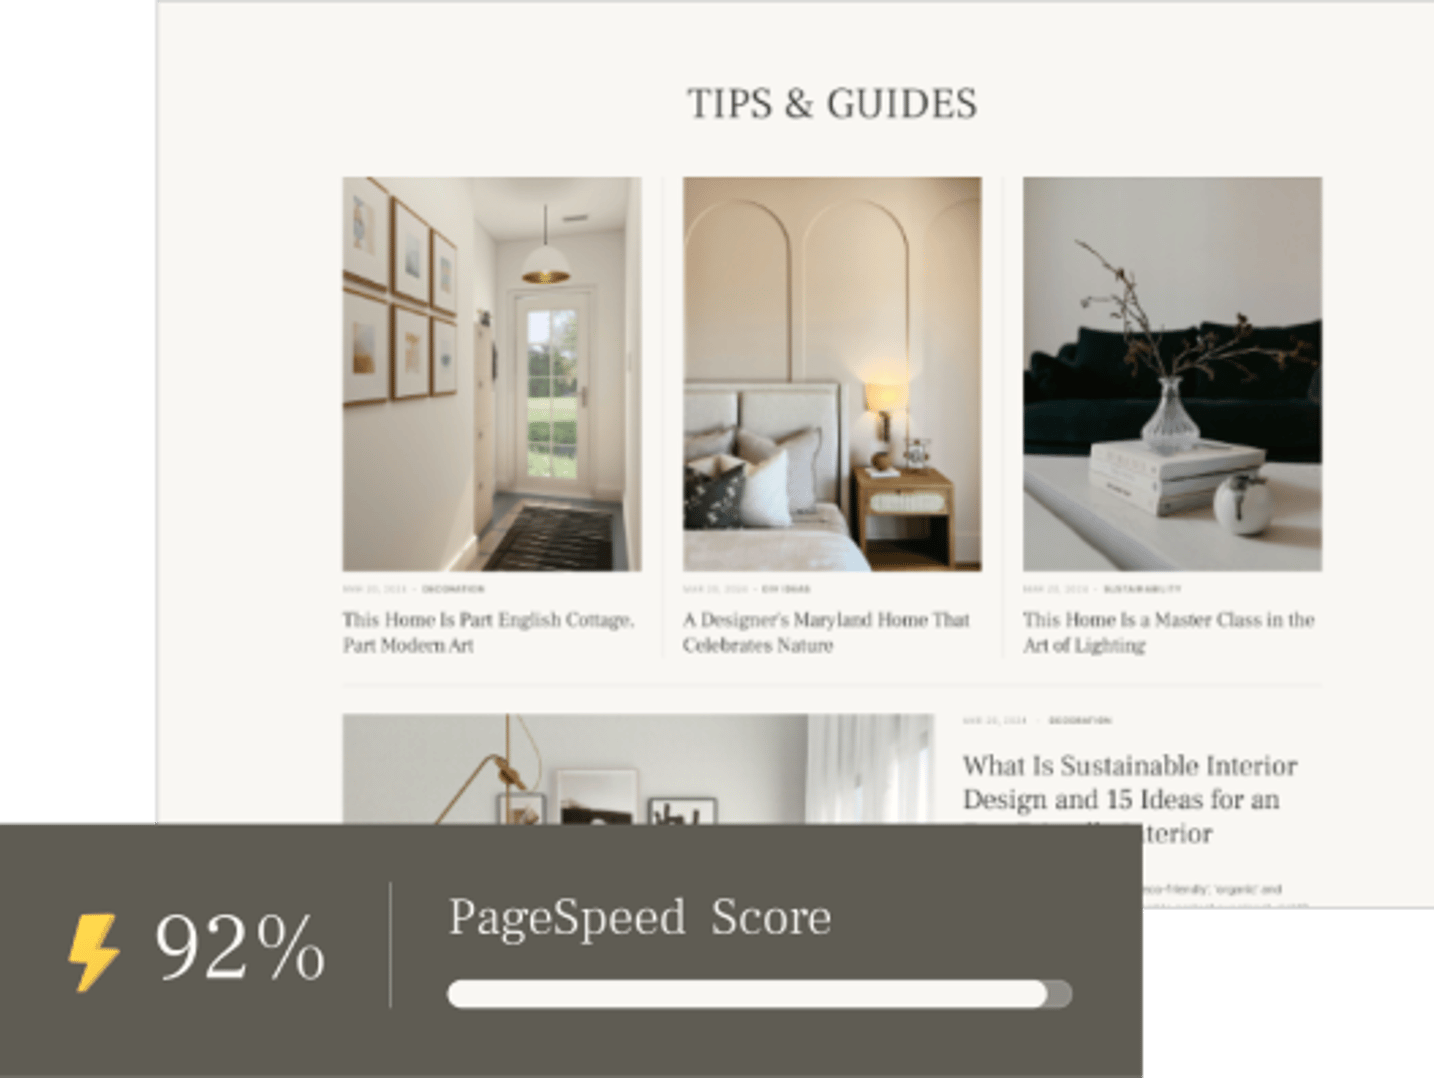 Interiocity - Home Decor Blog and Interior Design Magazine WordPress Theme - Google PageSpeed Insights Performance Score 90+ | CMSMasters studio